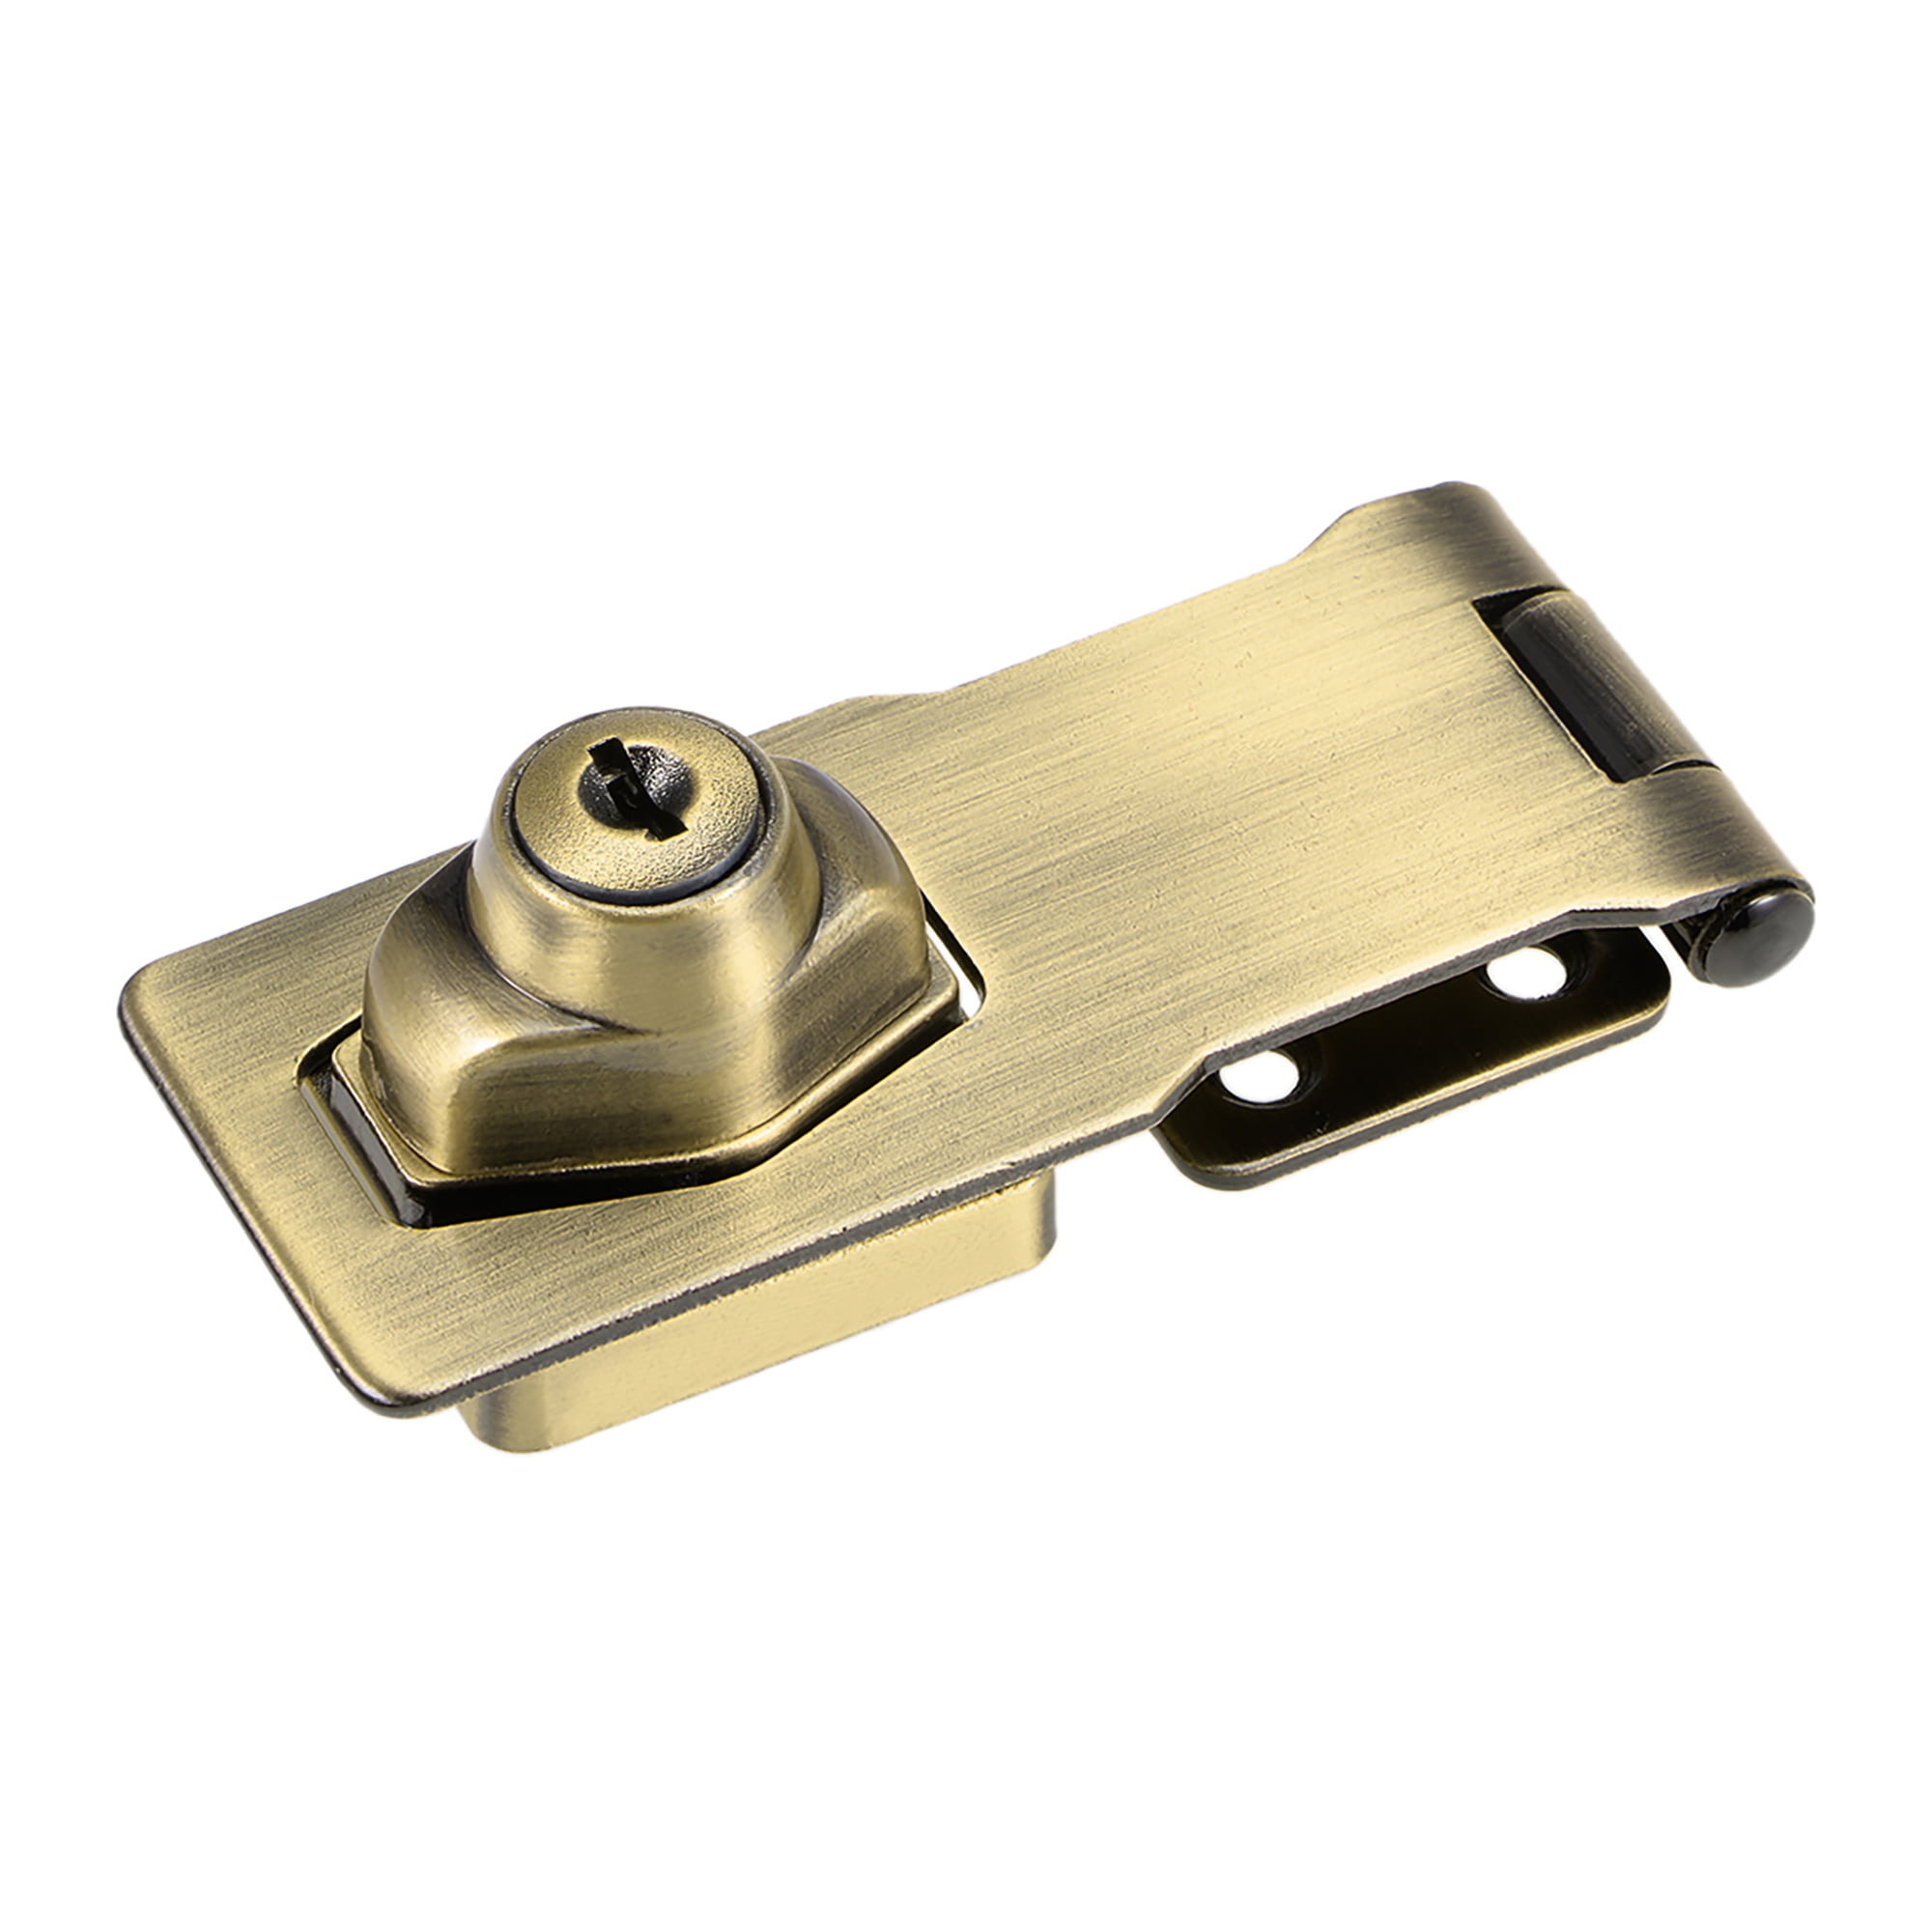 uxcell 4-inch Keyed Hasp Locks Zinc Alloy Twist Knob Keyed Locking Hasp W Screws for Door Cabinet Keyed Alike Bronze Tone 2Pcs